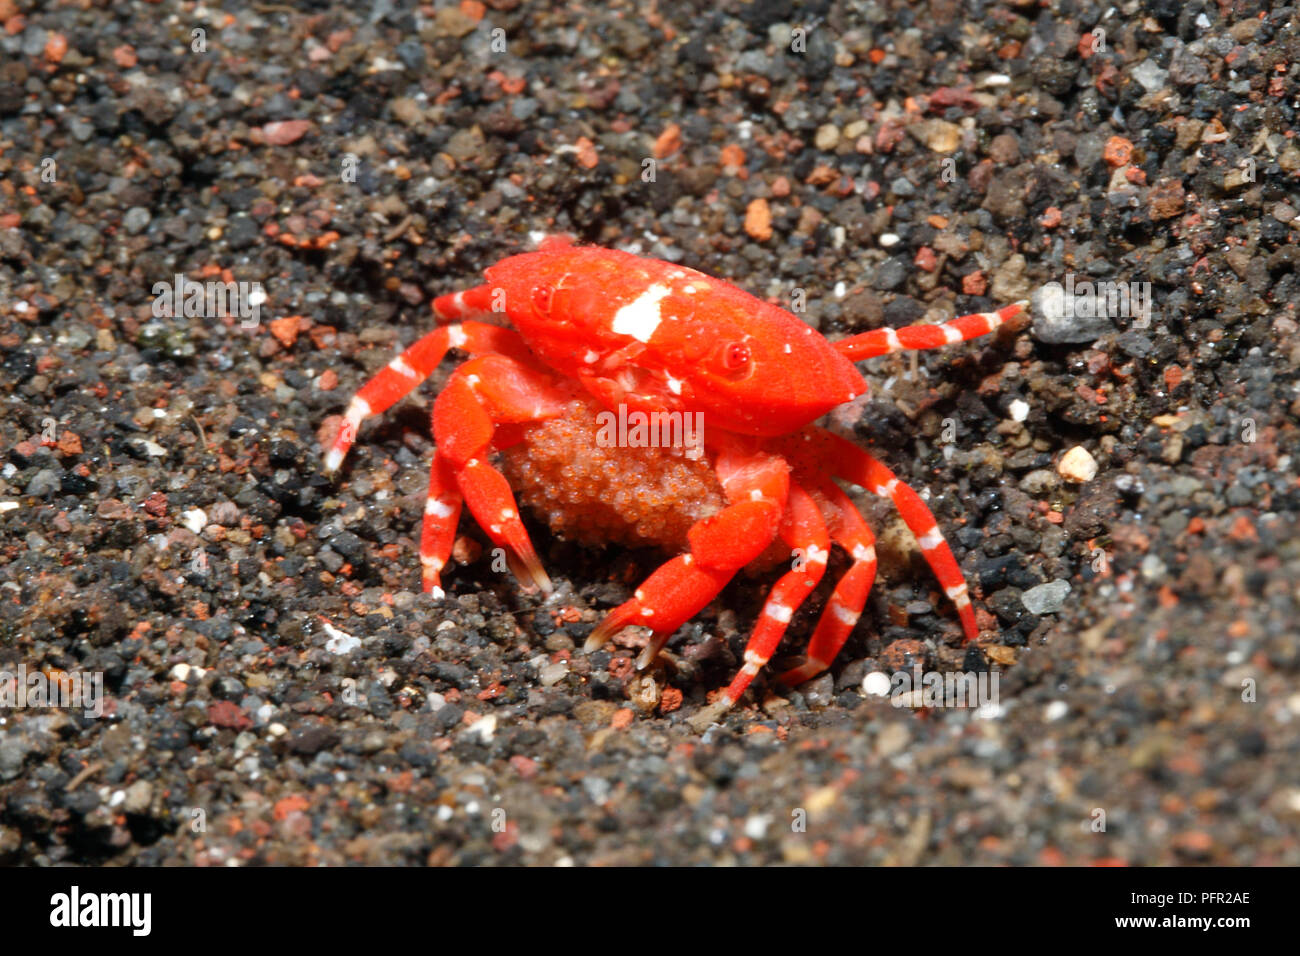 Crab eggs -Fotos und -Bildmaterial in hoher Auflösung – Alamy